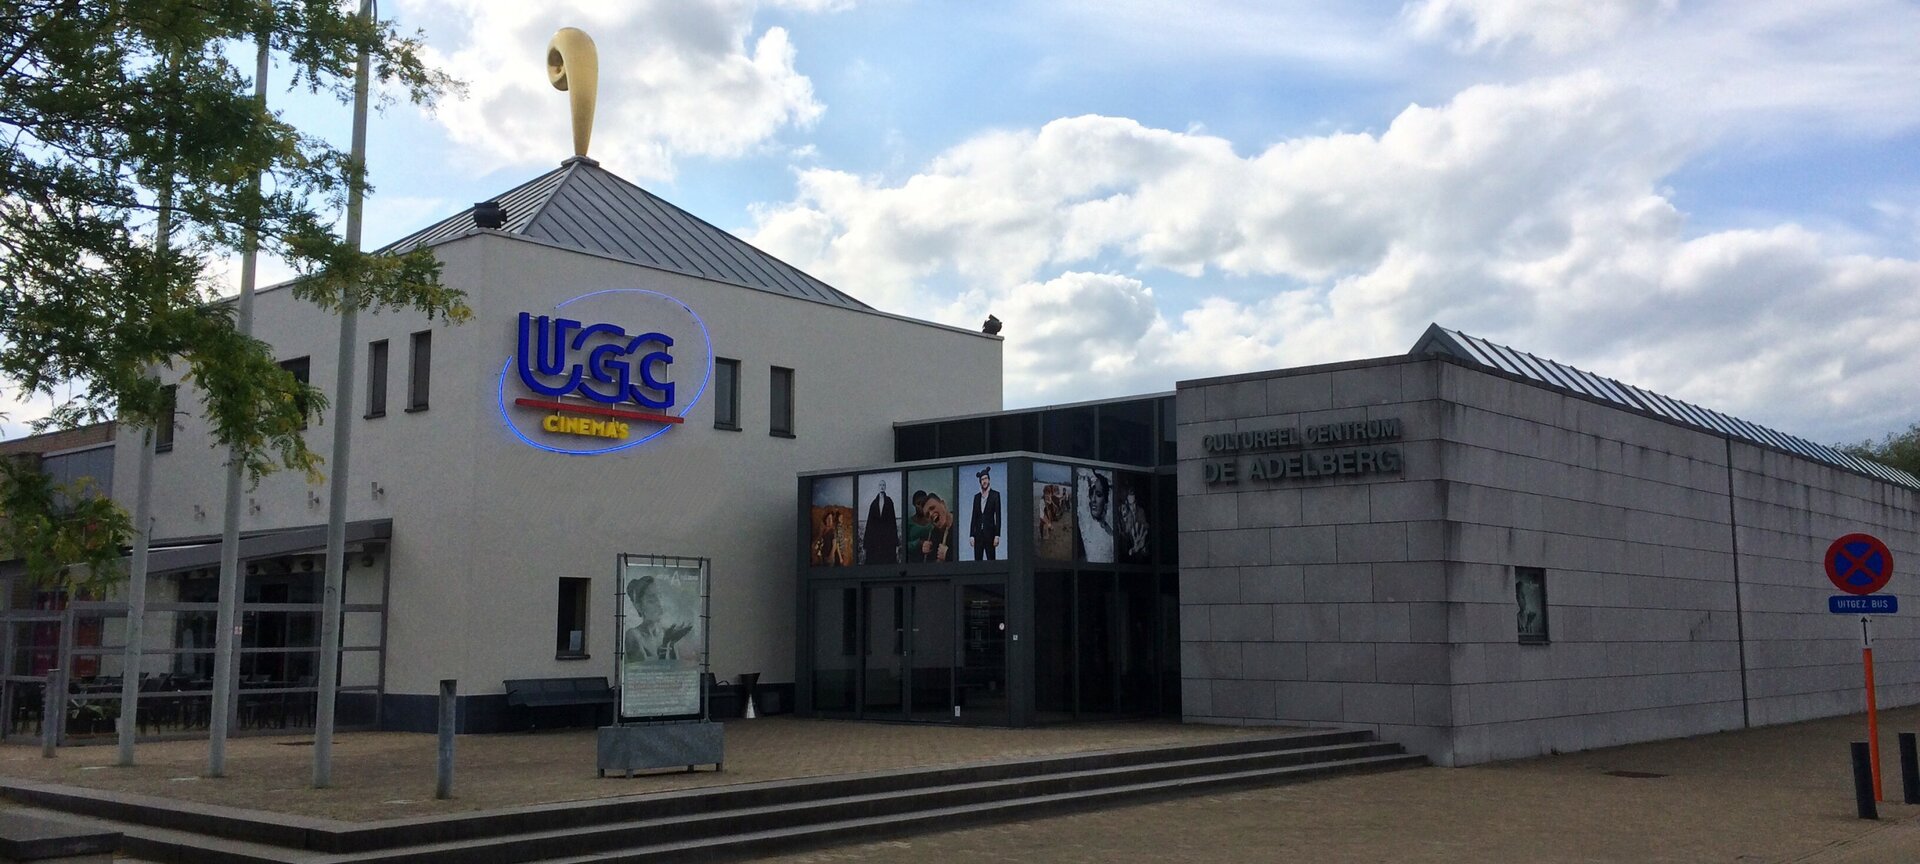 UGC Cinema's Lommel - UGC Cinema Lommel gebouw